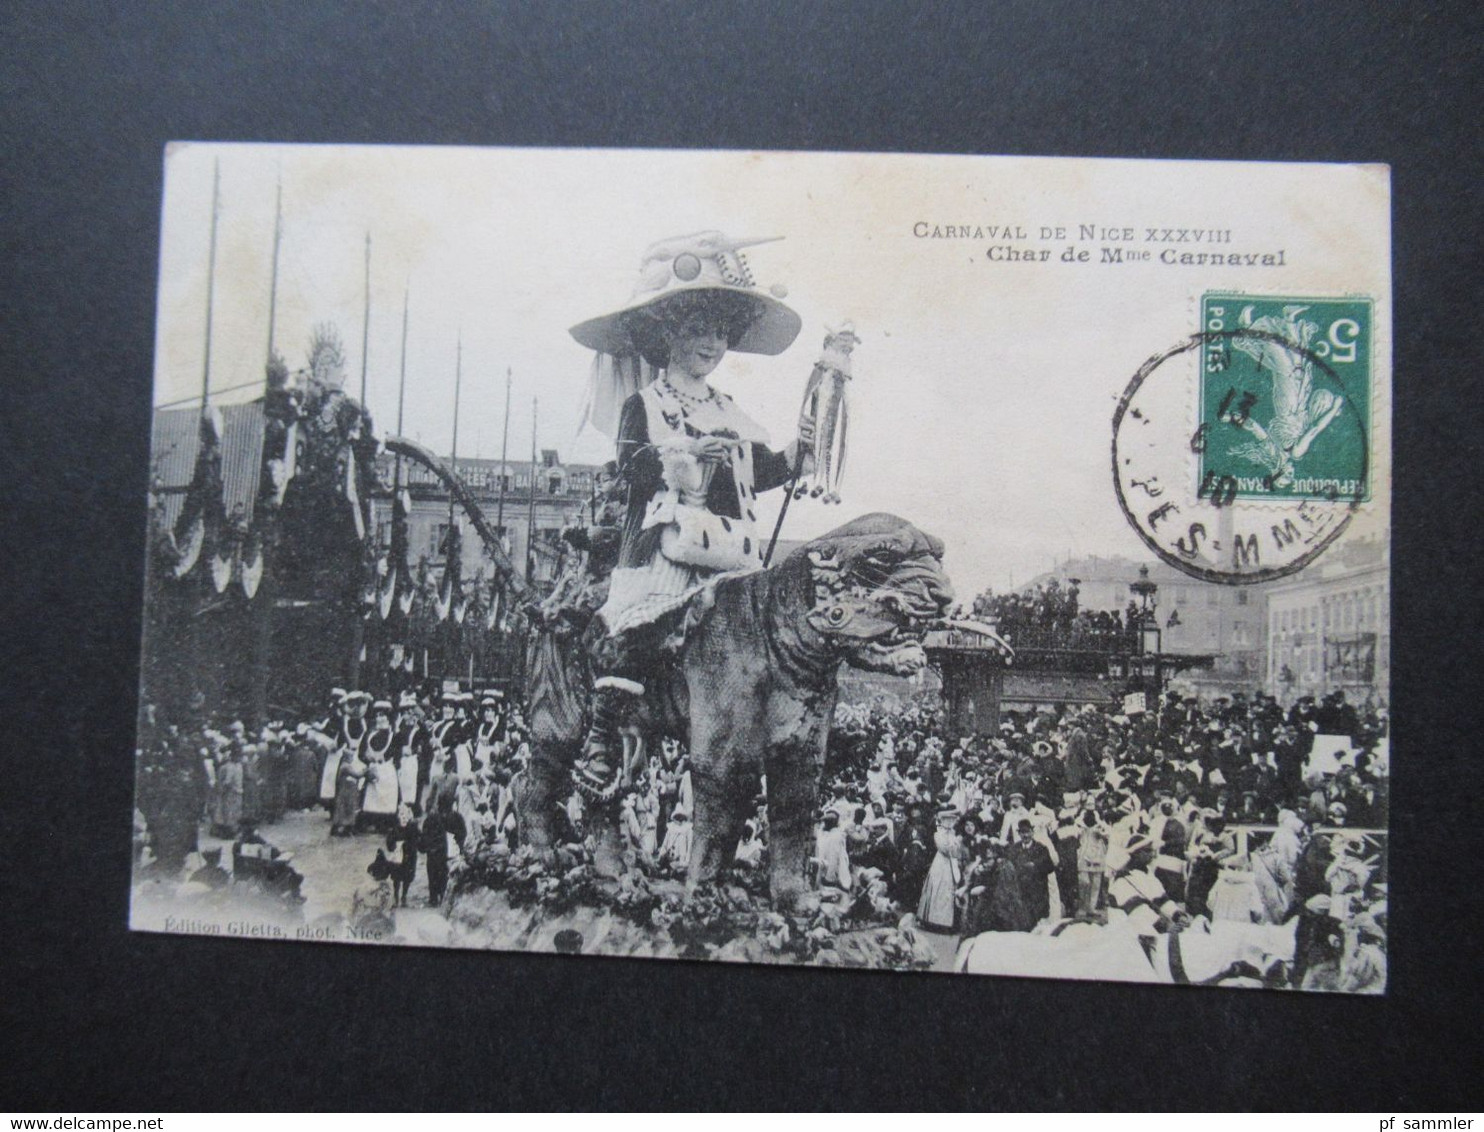 Frankreich 1910 AK Bildseitig Frankiert Fasching / Karneval Carnaval De Nice XXXVIII Char De Mme Carnaval - Carnevale